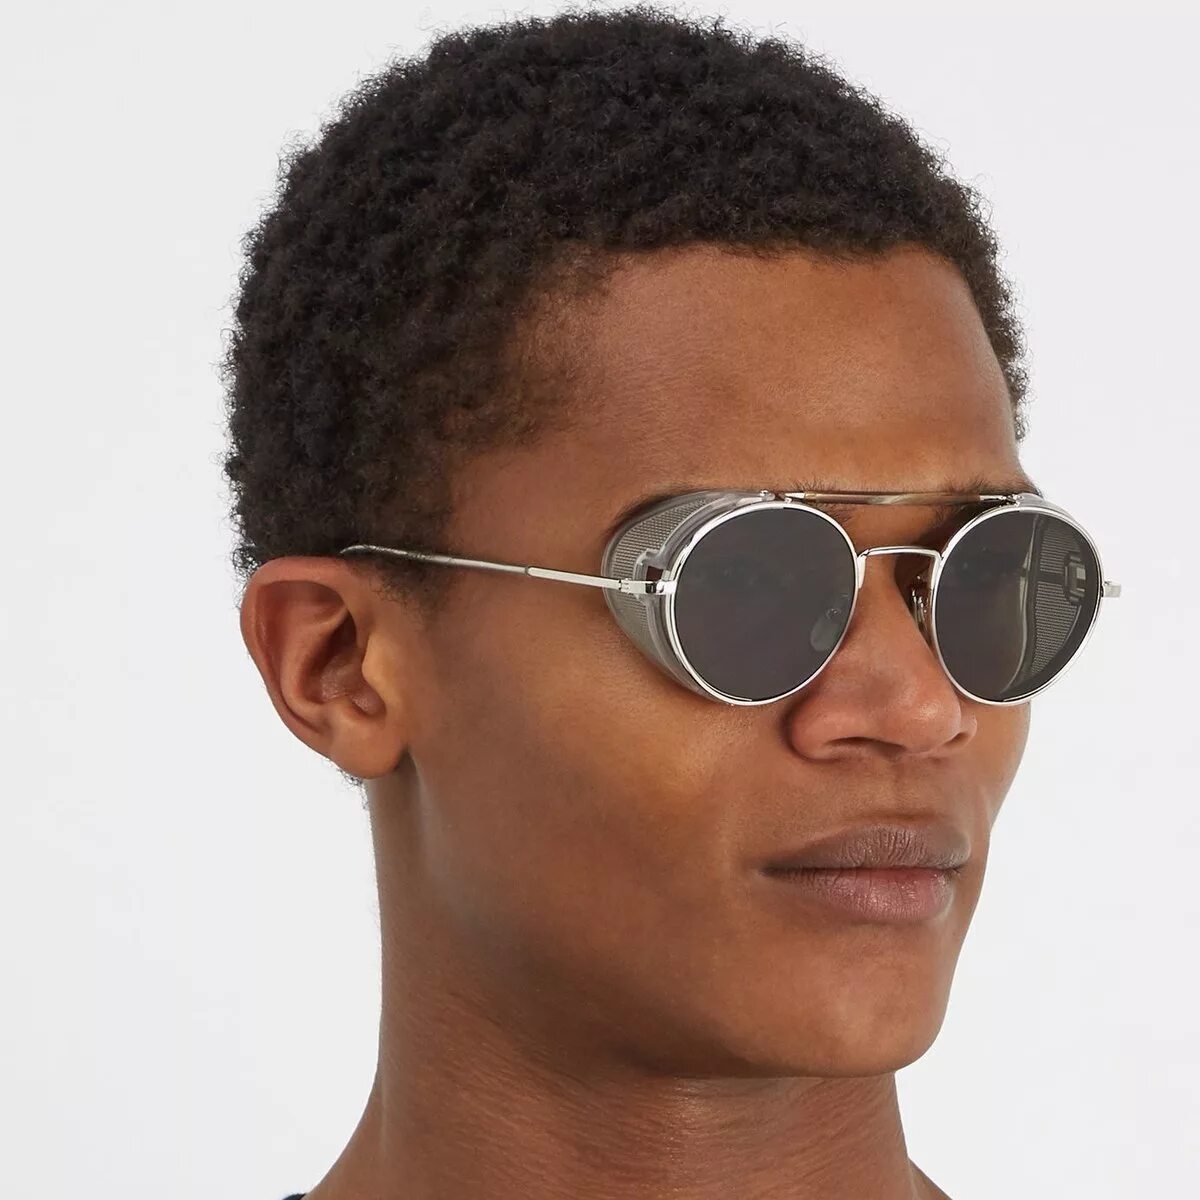 Round sunglasses. Thom Browne очки мужские. Thom Browne Round Sunglasses. Очки Thom Browne 5523. Thom Browne очки солнцезащитные.